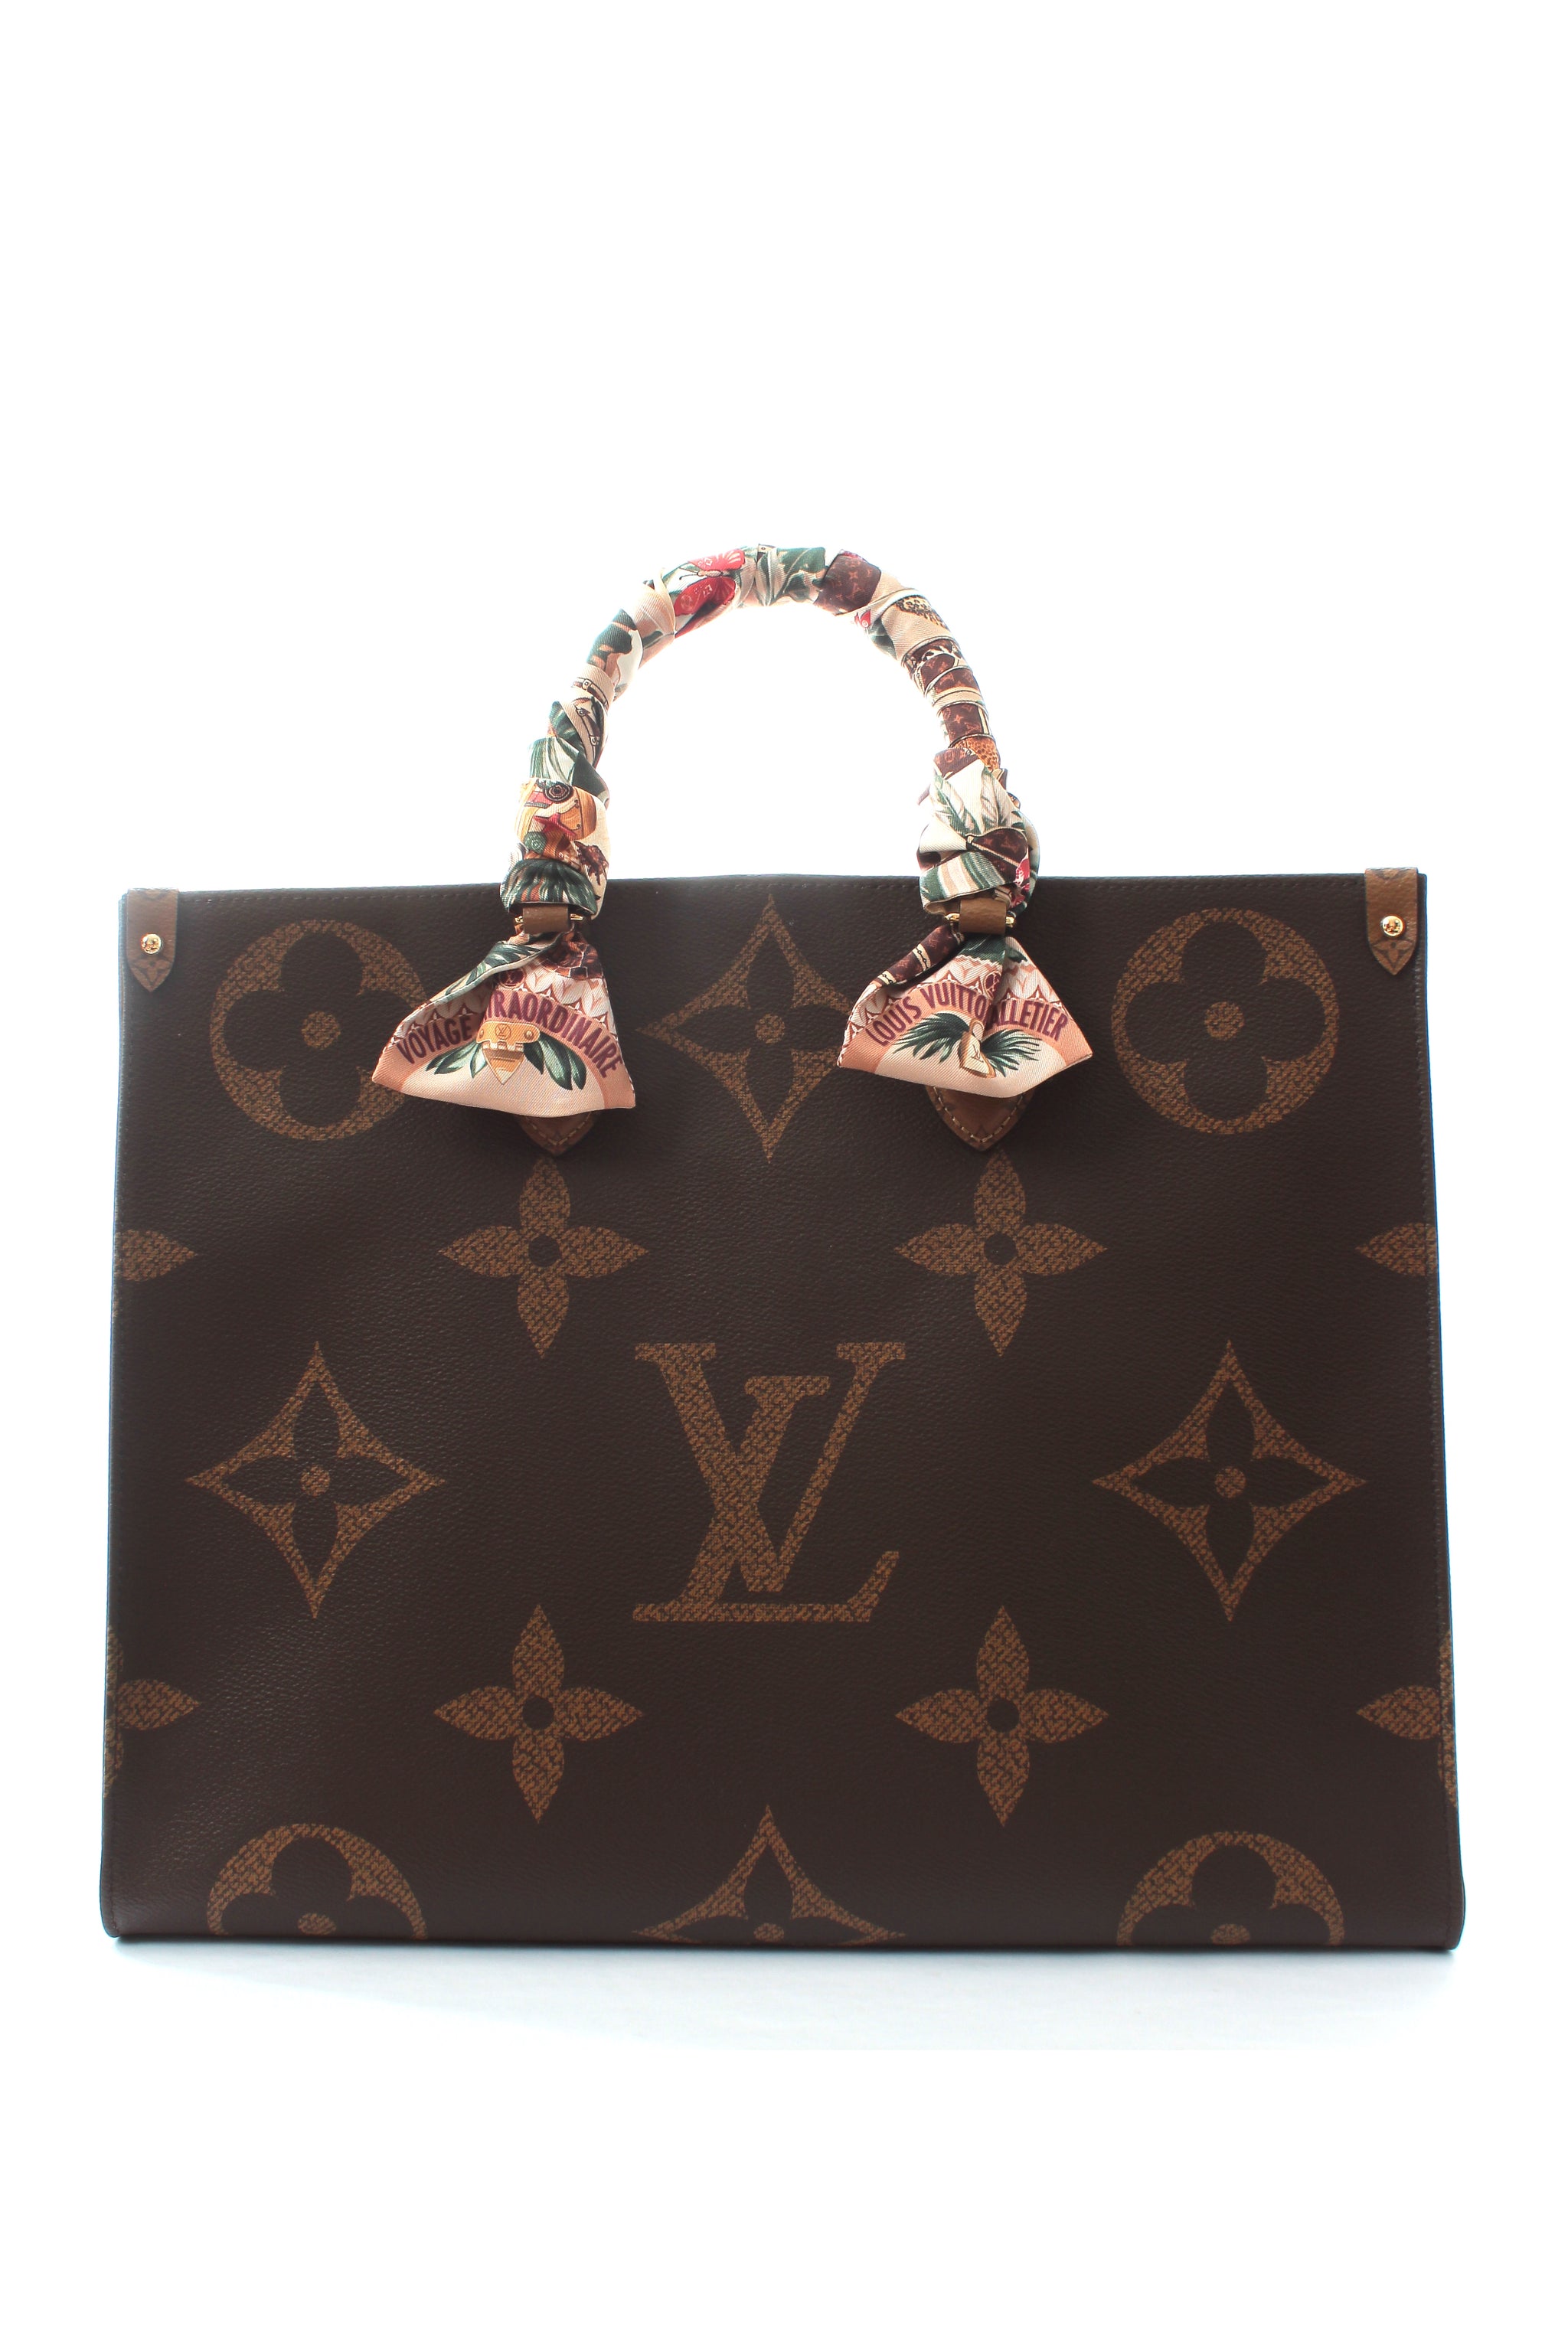 Louis Vuitton Monogram Carryall